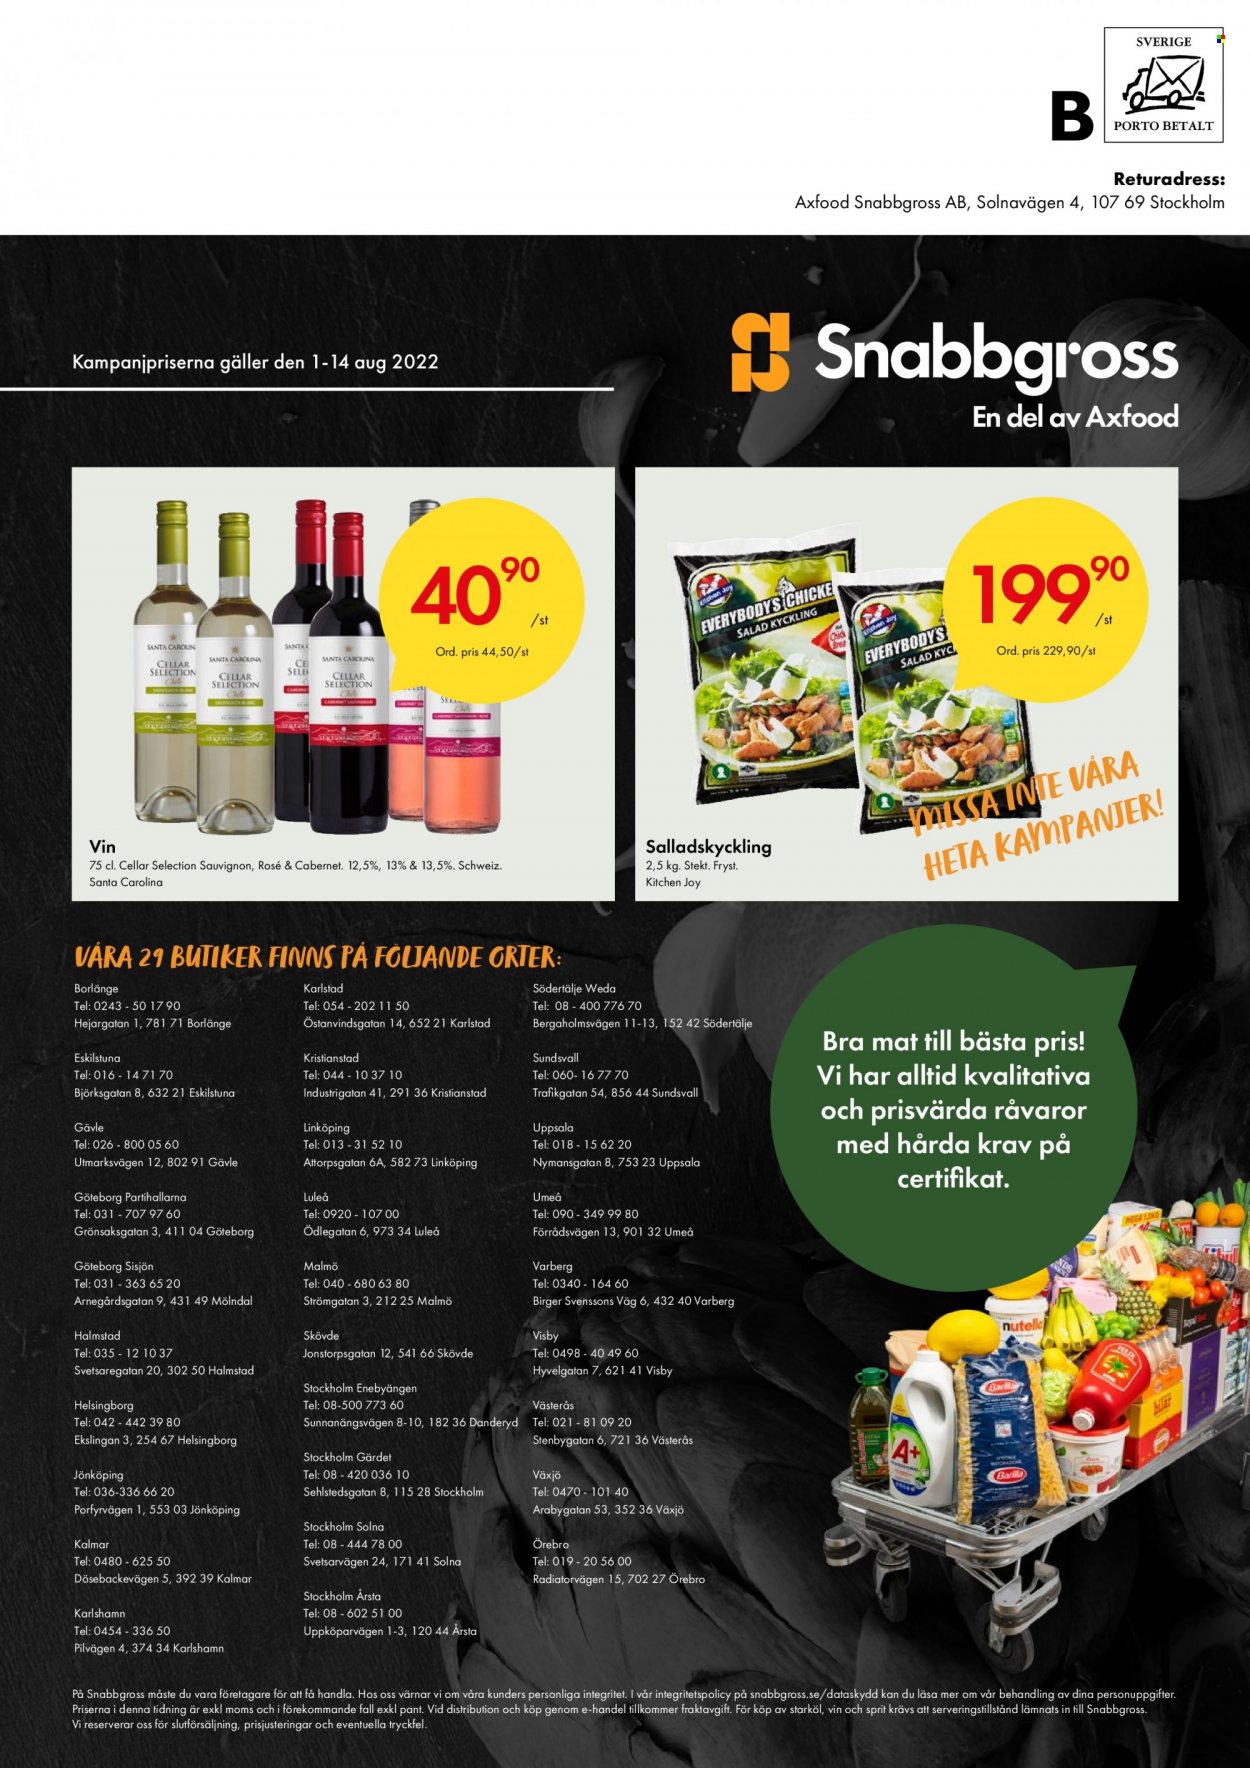 Axfood Snabbgross reklamblad - 1/8 2022 - 14/8 2022.